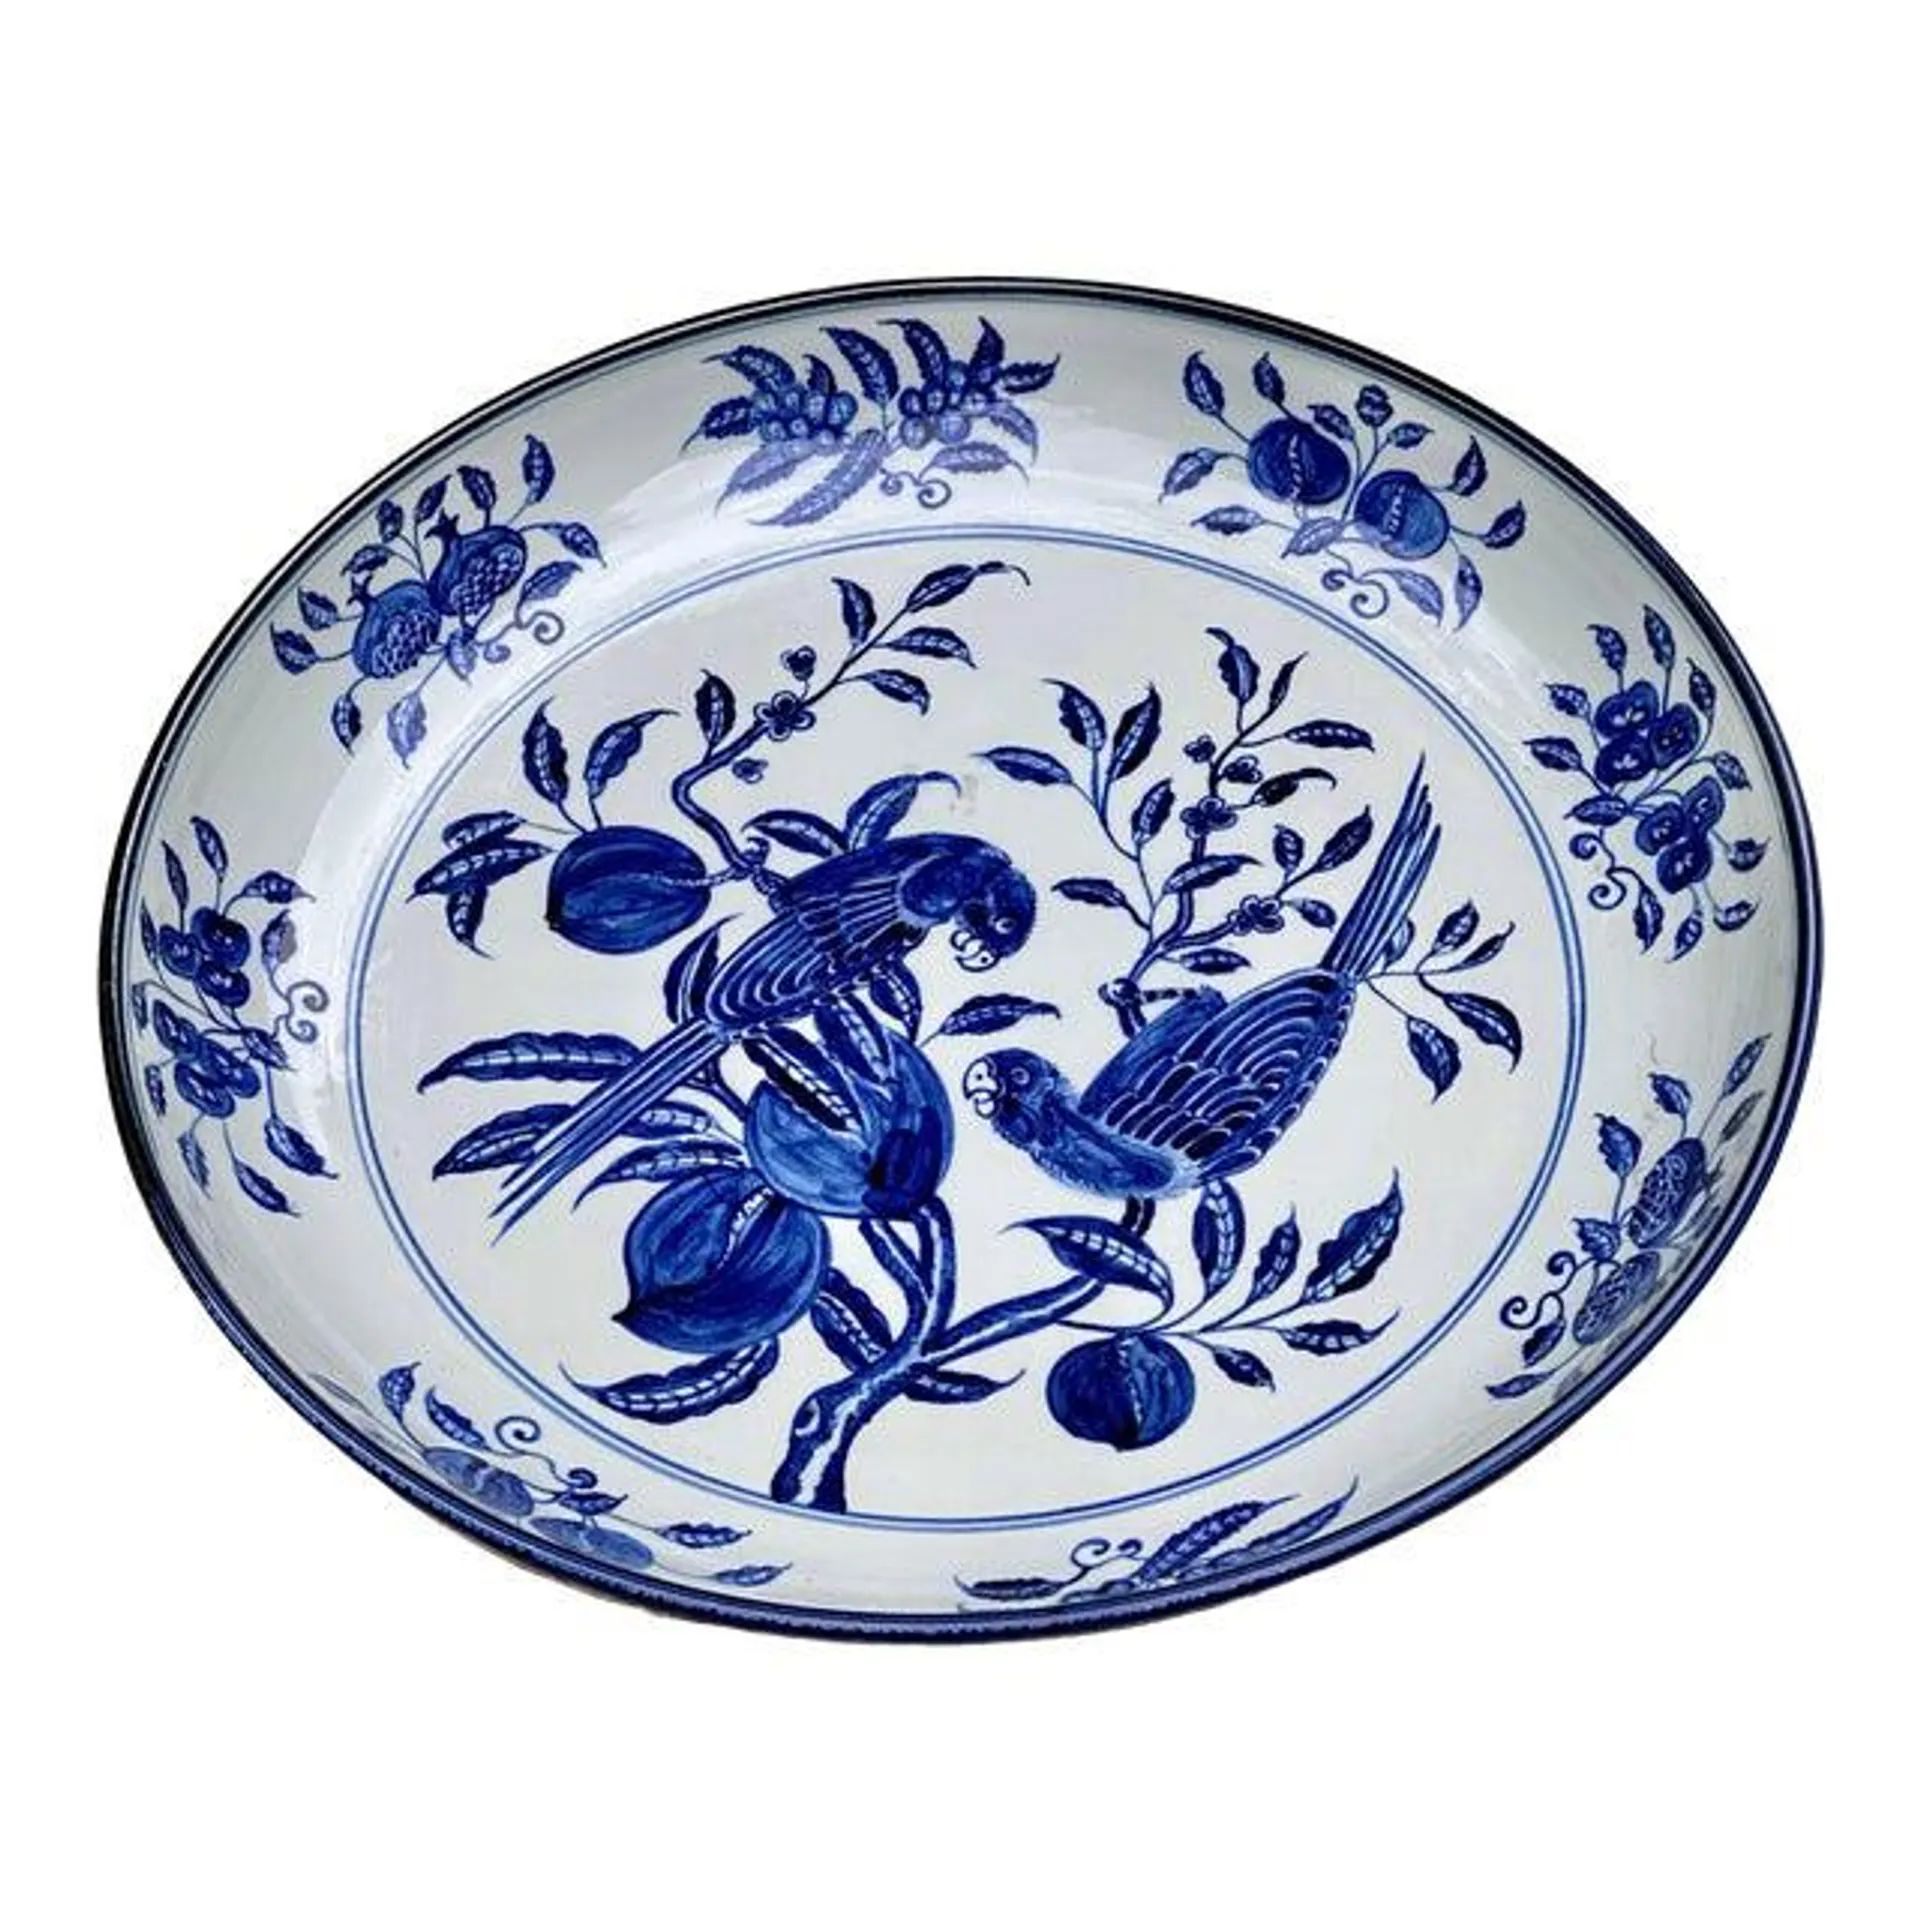 Early 21st Century Large Round Decorative Blue & White Platter With Birds & Pomegranates